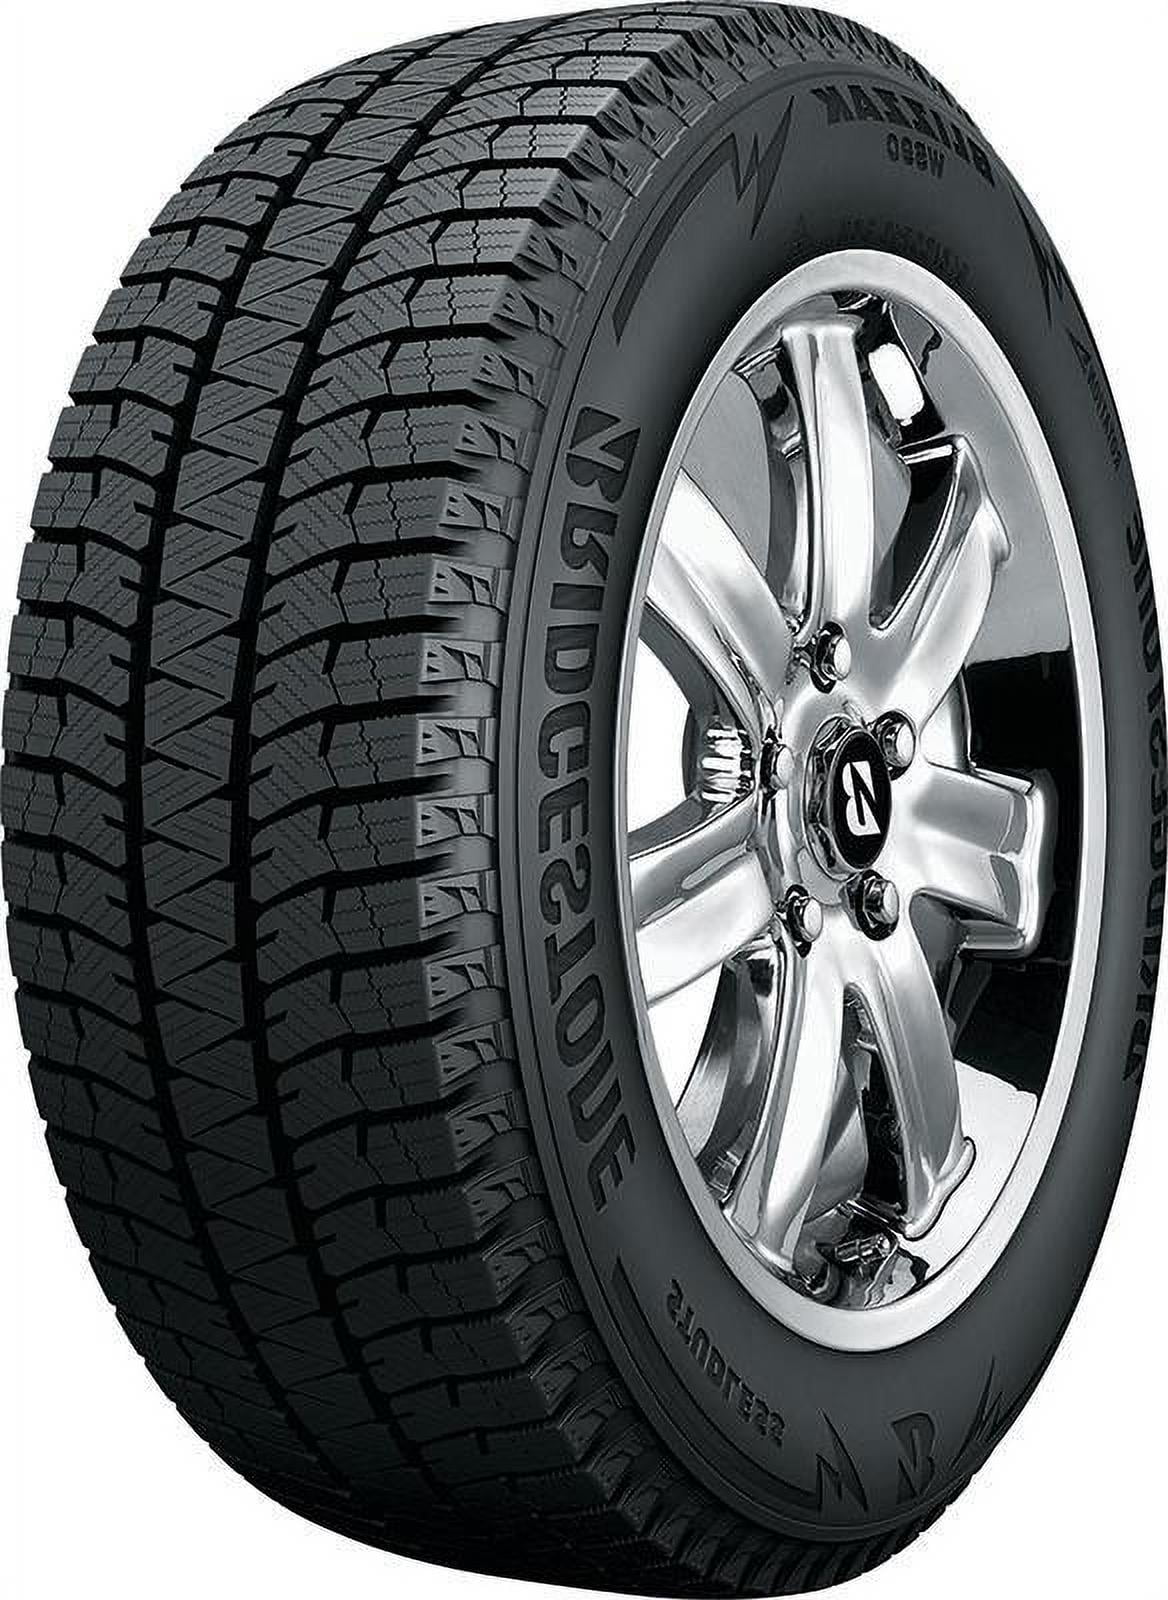 Bridgestone Blizzak WS90 Winter Passenger 215/55R16 97H XL Tire